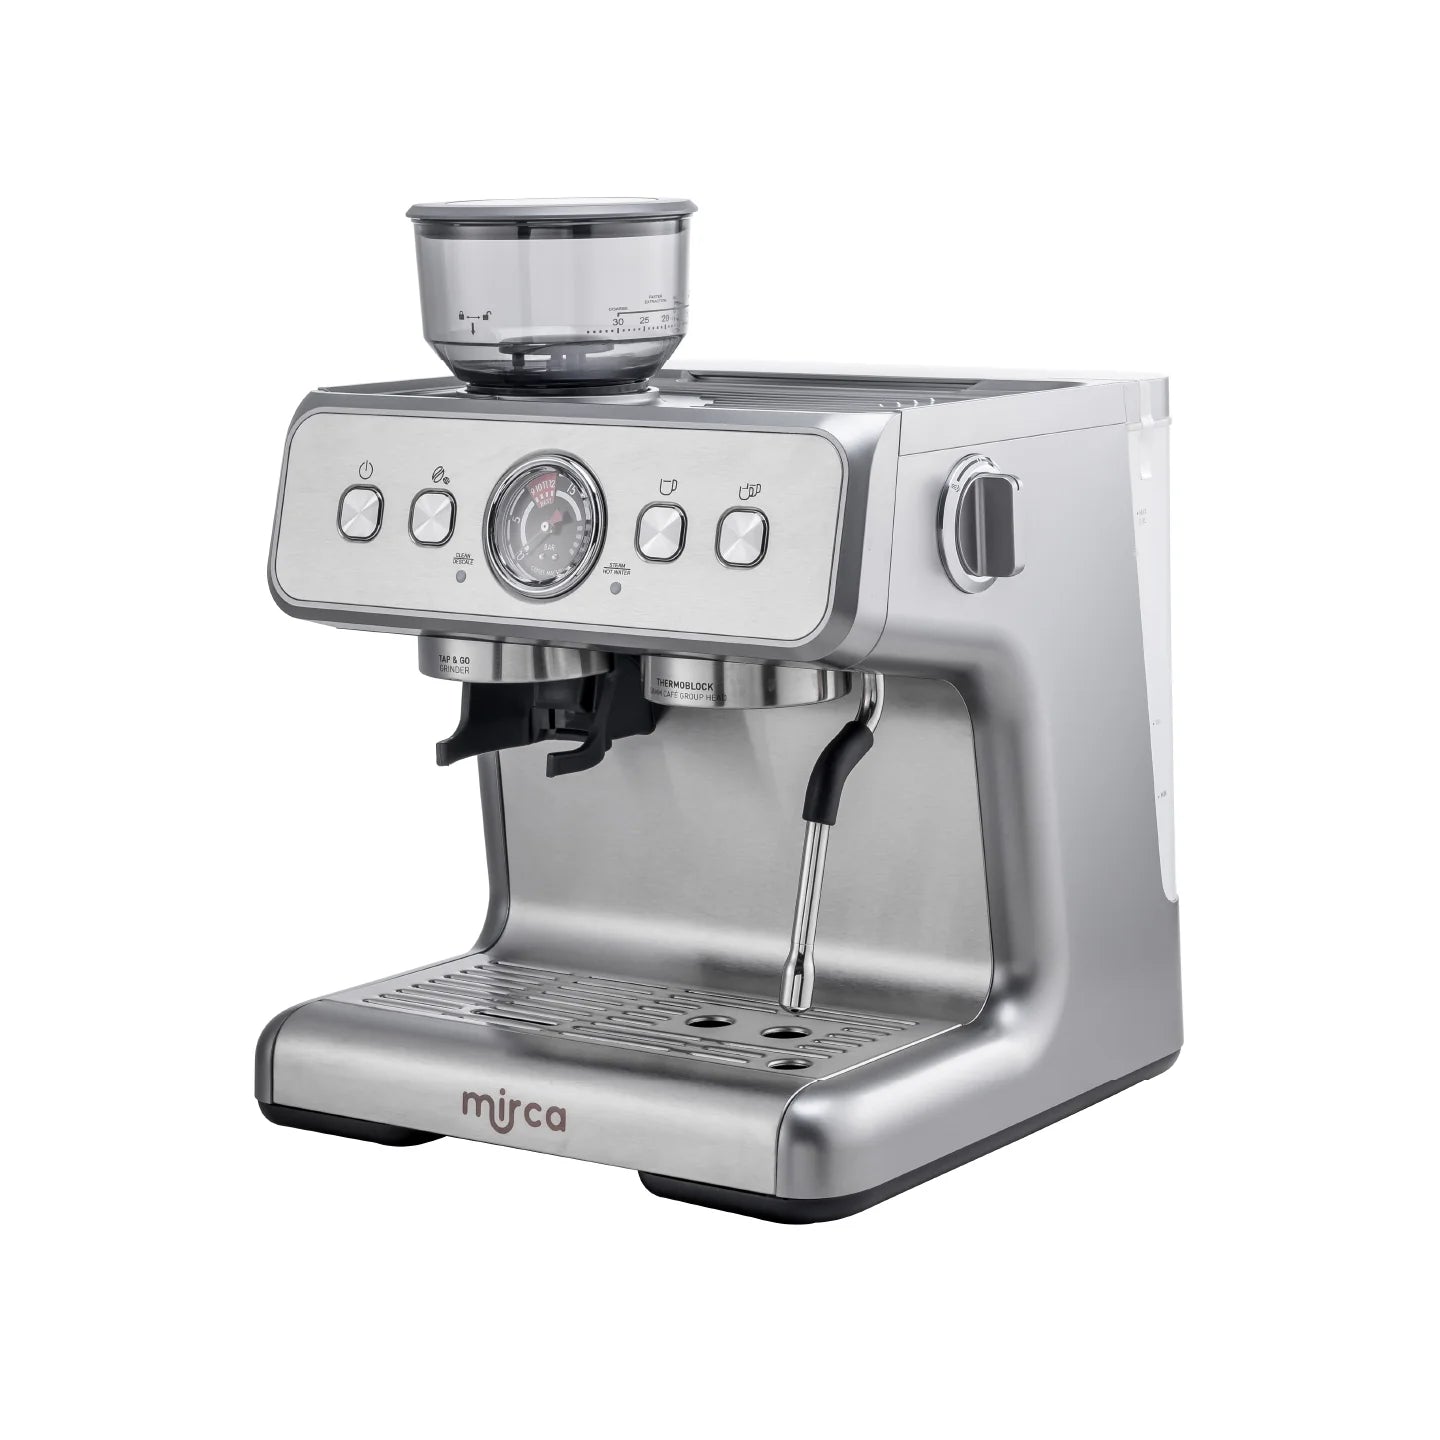 The Mirca Espresso Machine With Grinder